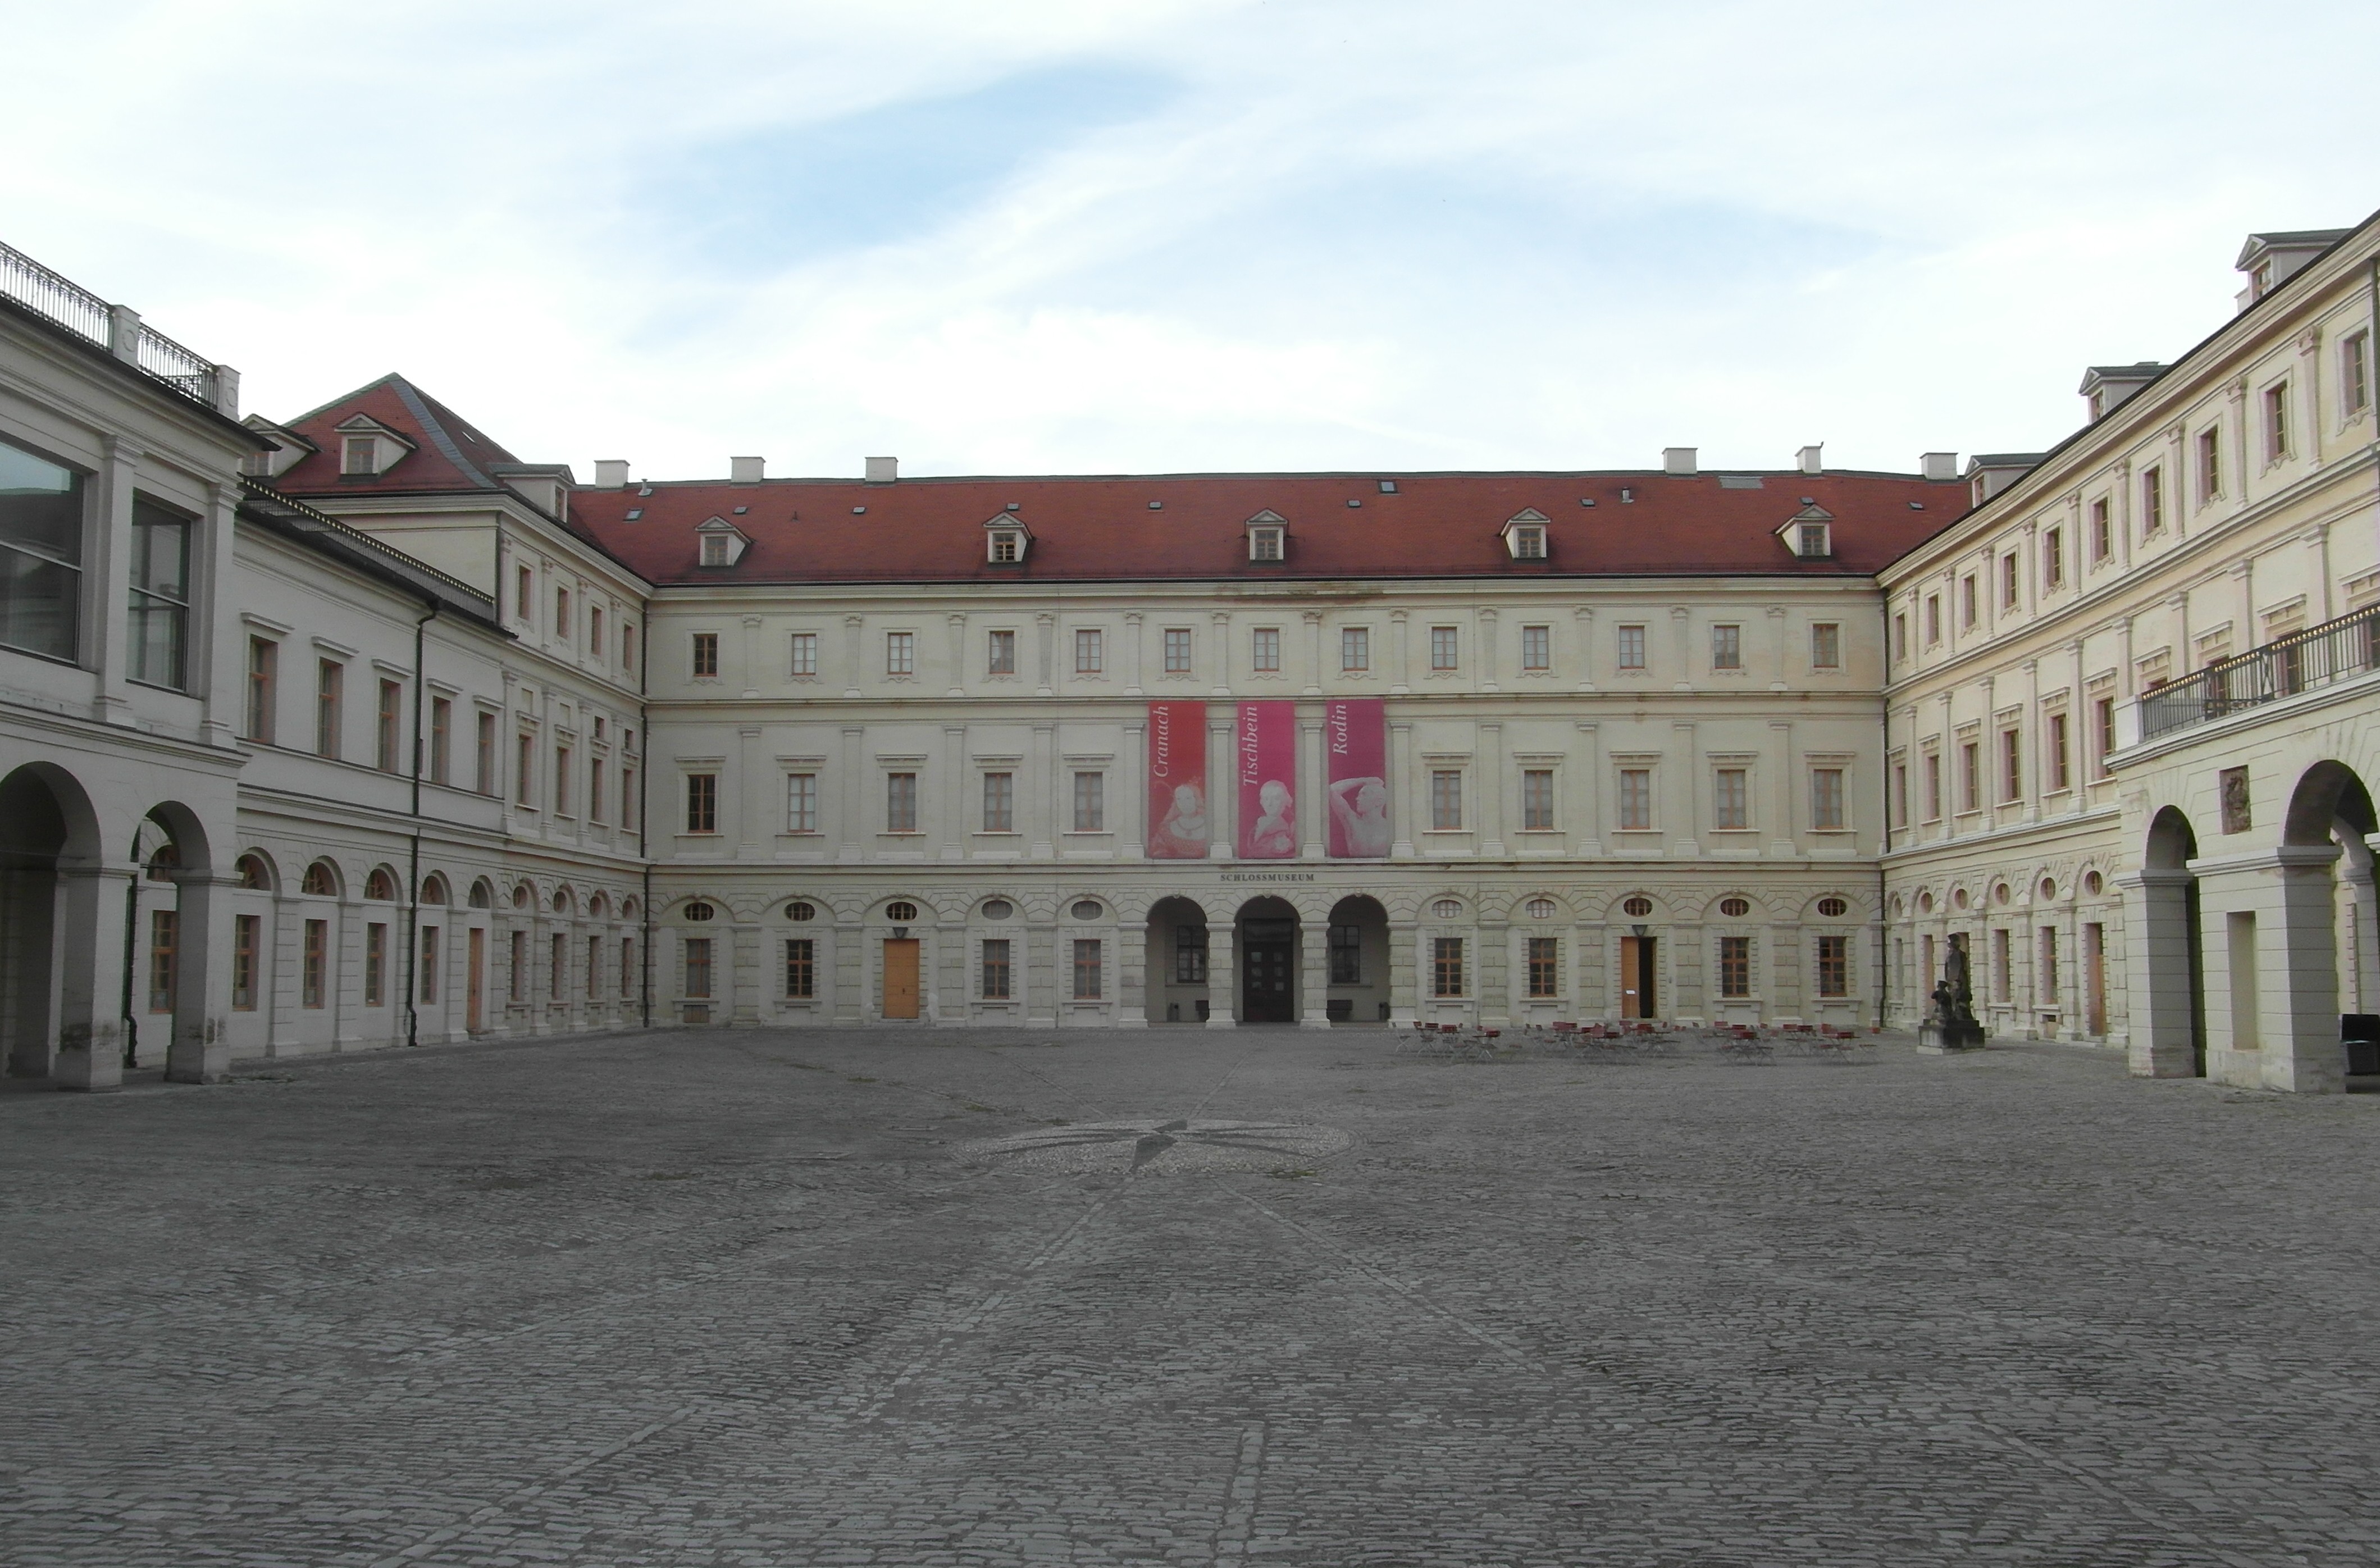 Schloss Weimar court from the south